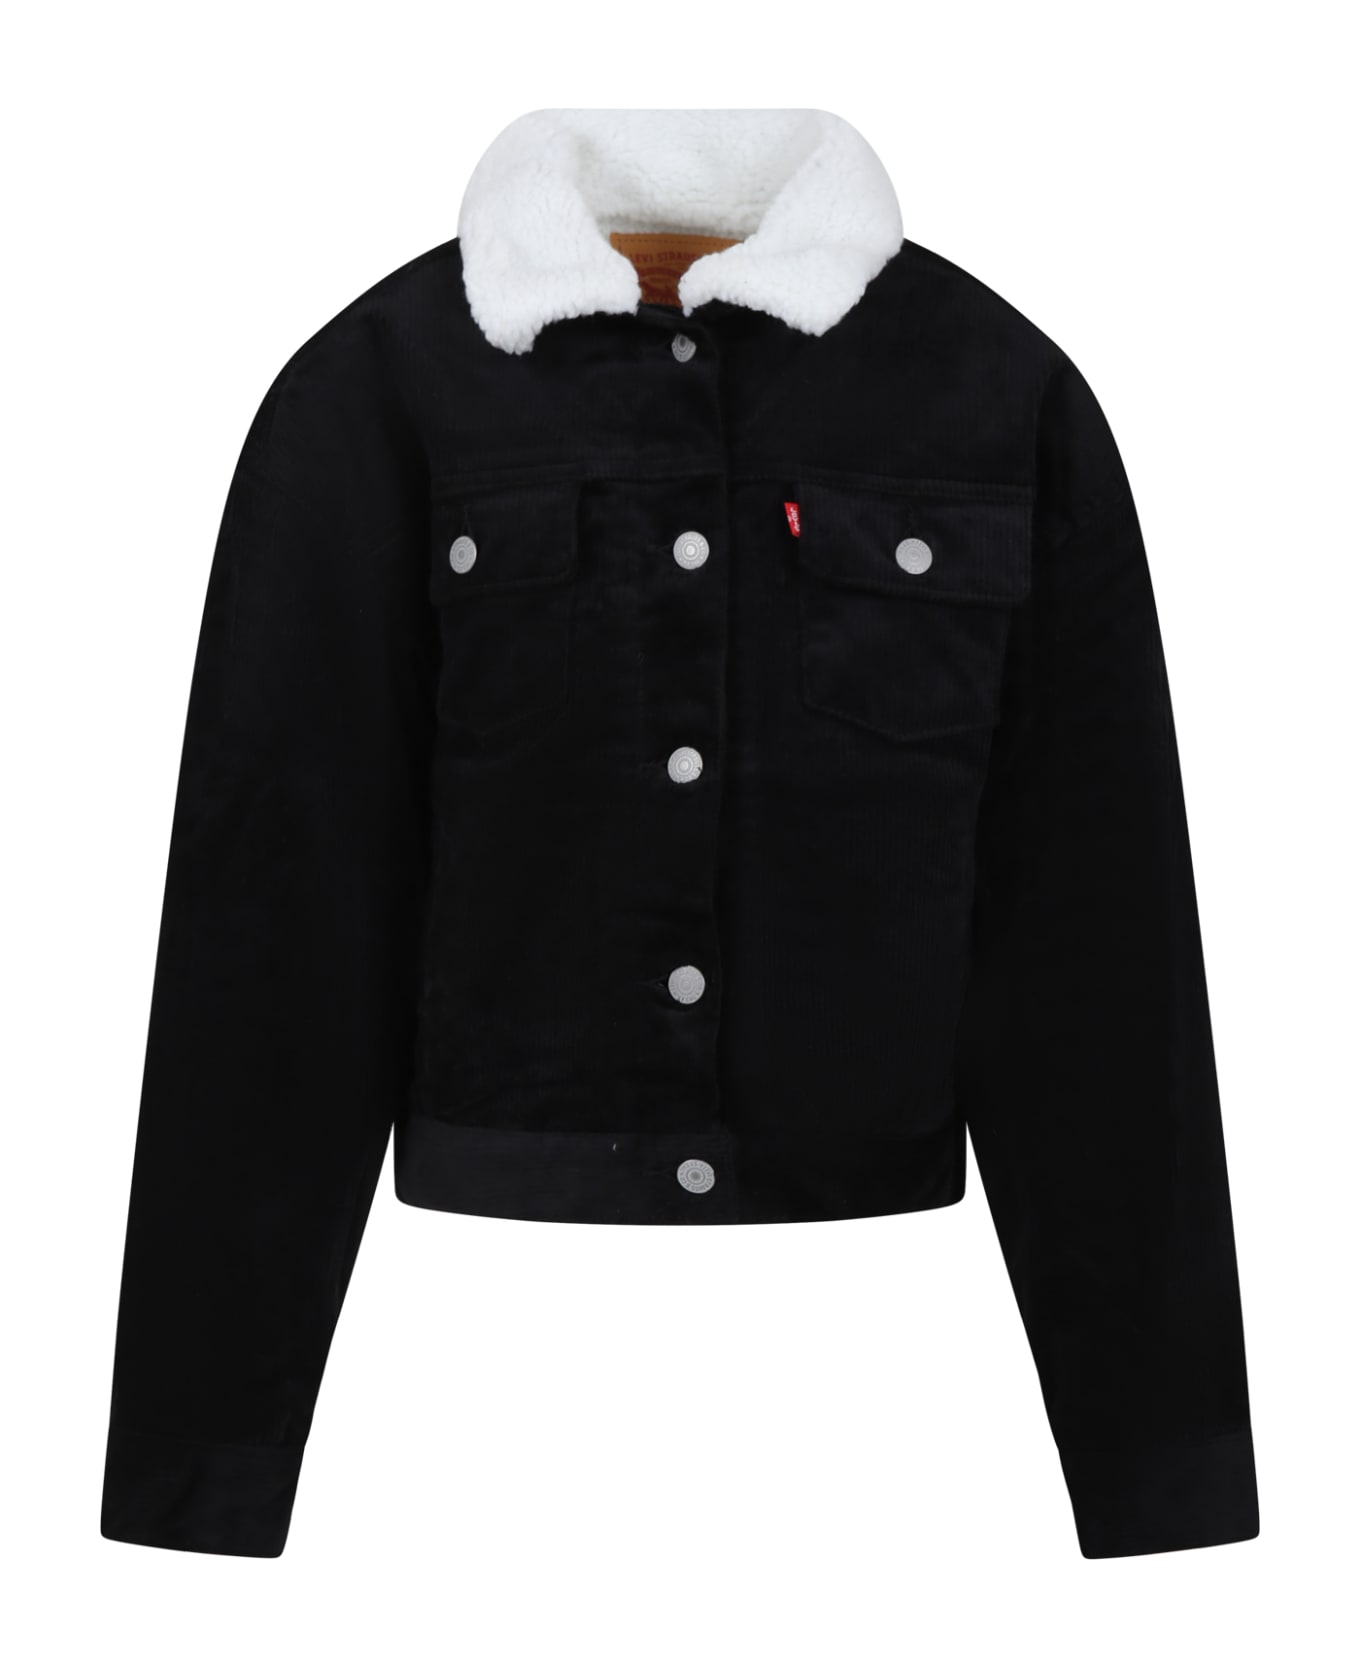 Levi's Black Jacket For Girl With Logo - Black